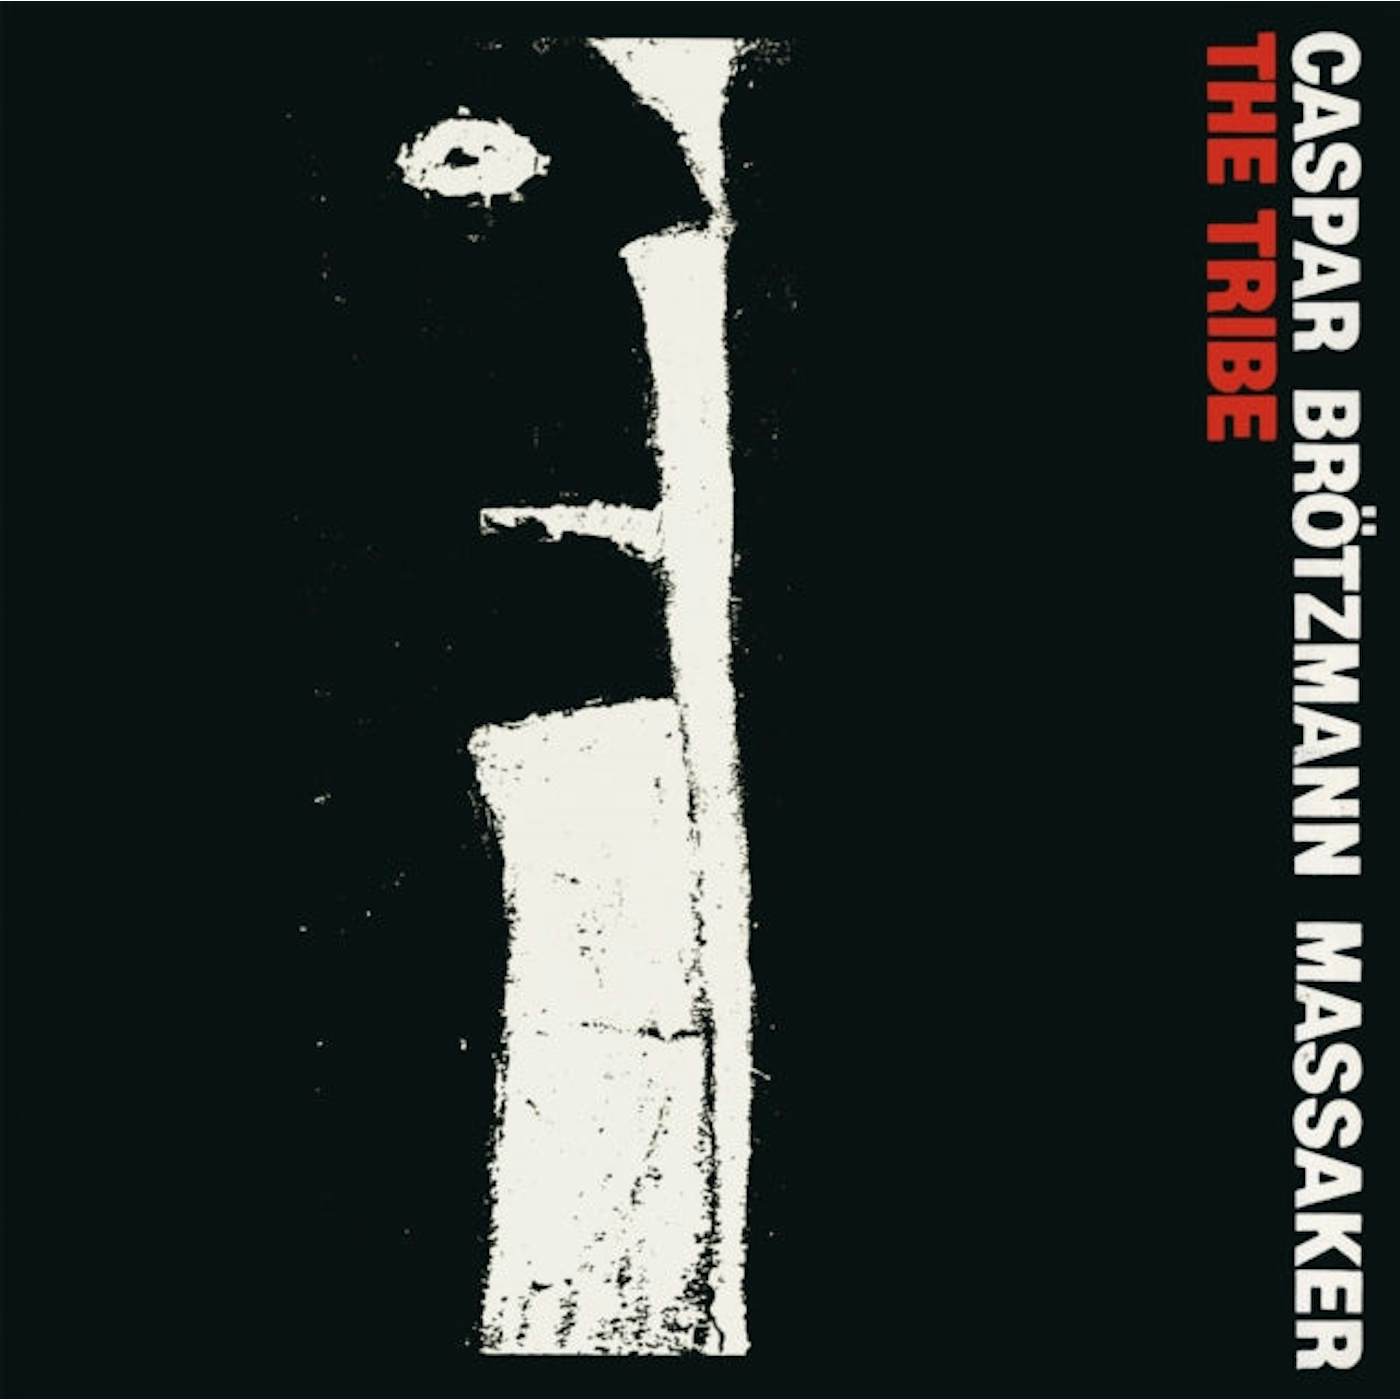 Caspar Brötzmann Massaker LP - Tribe The (Vinyl)